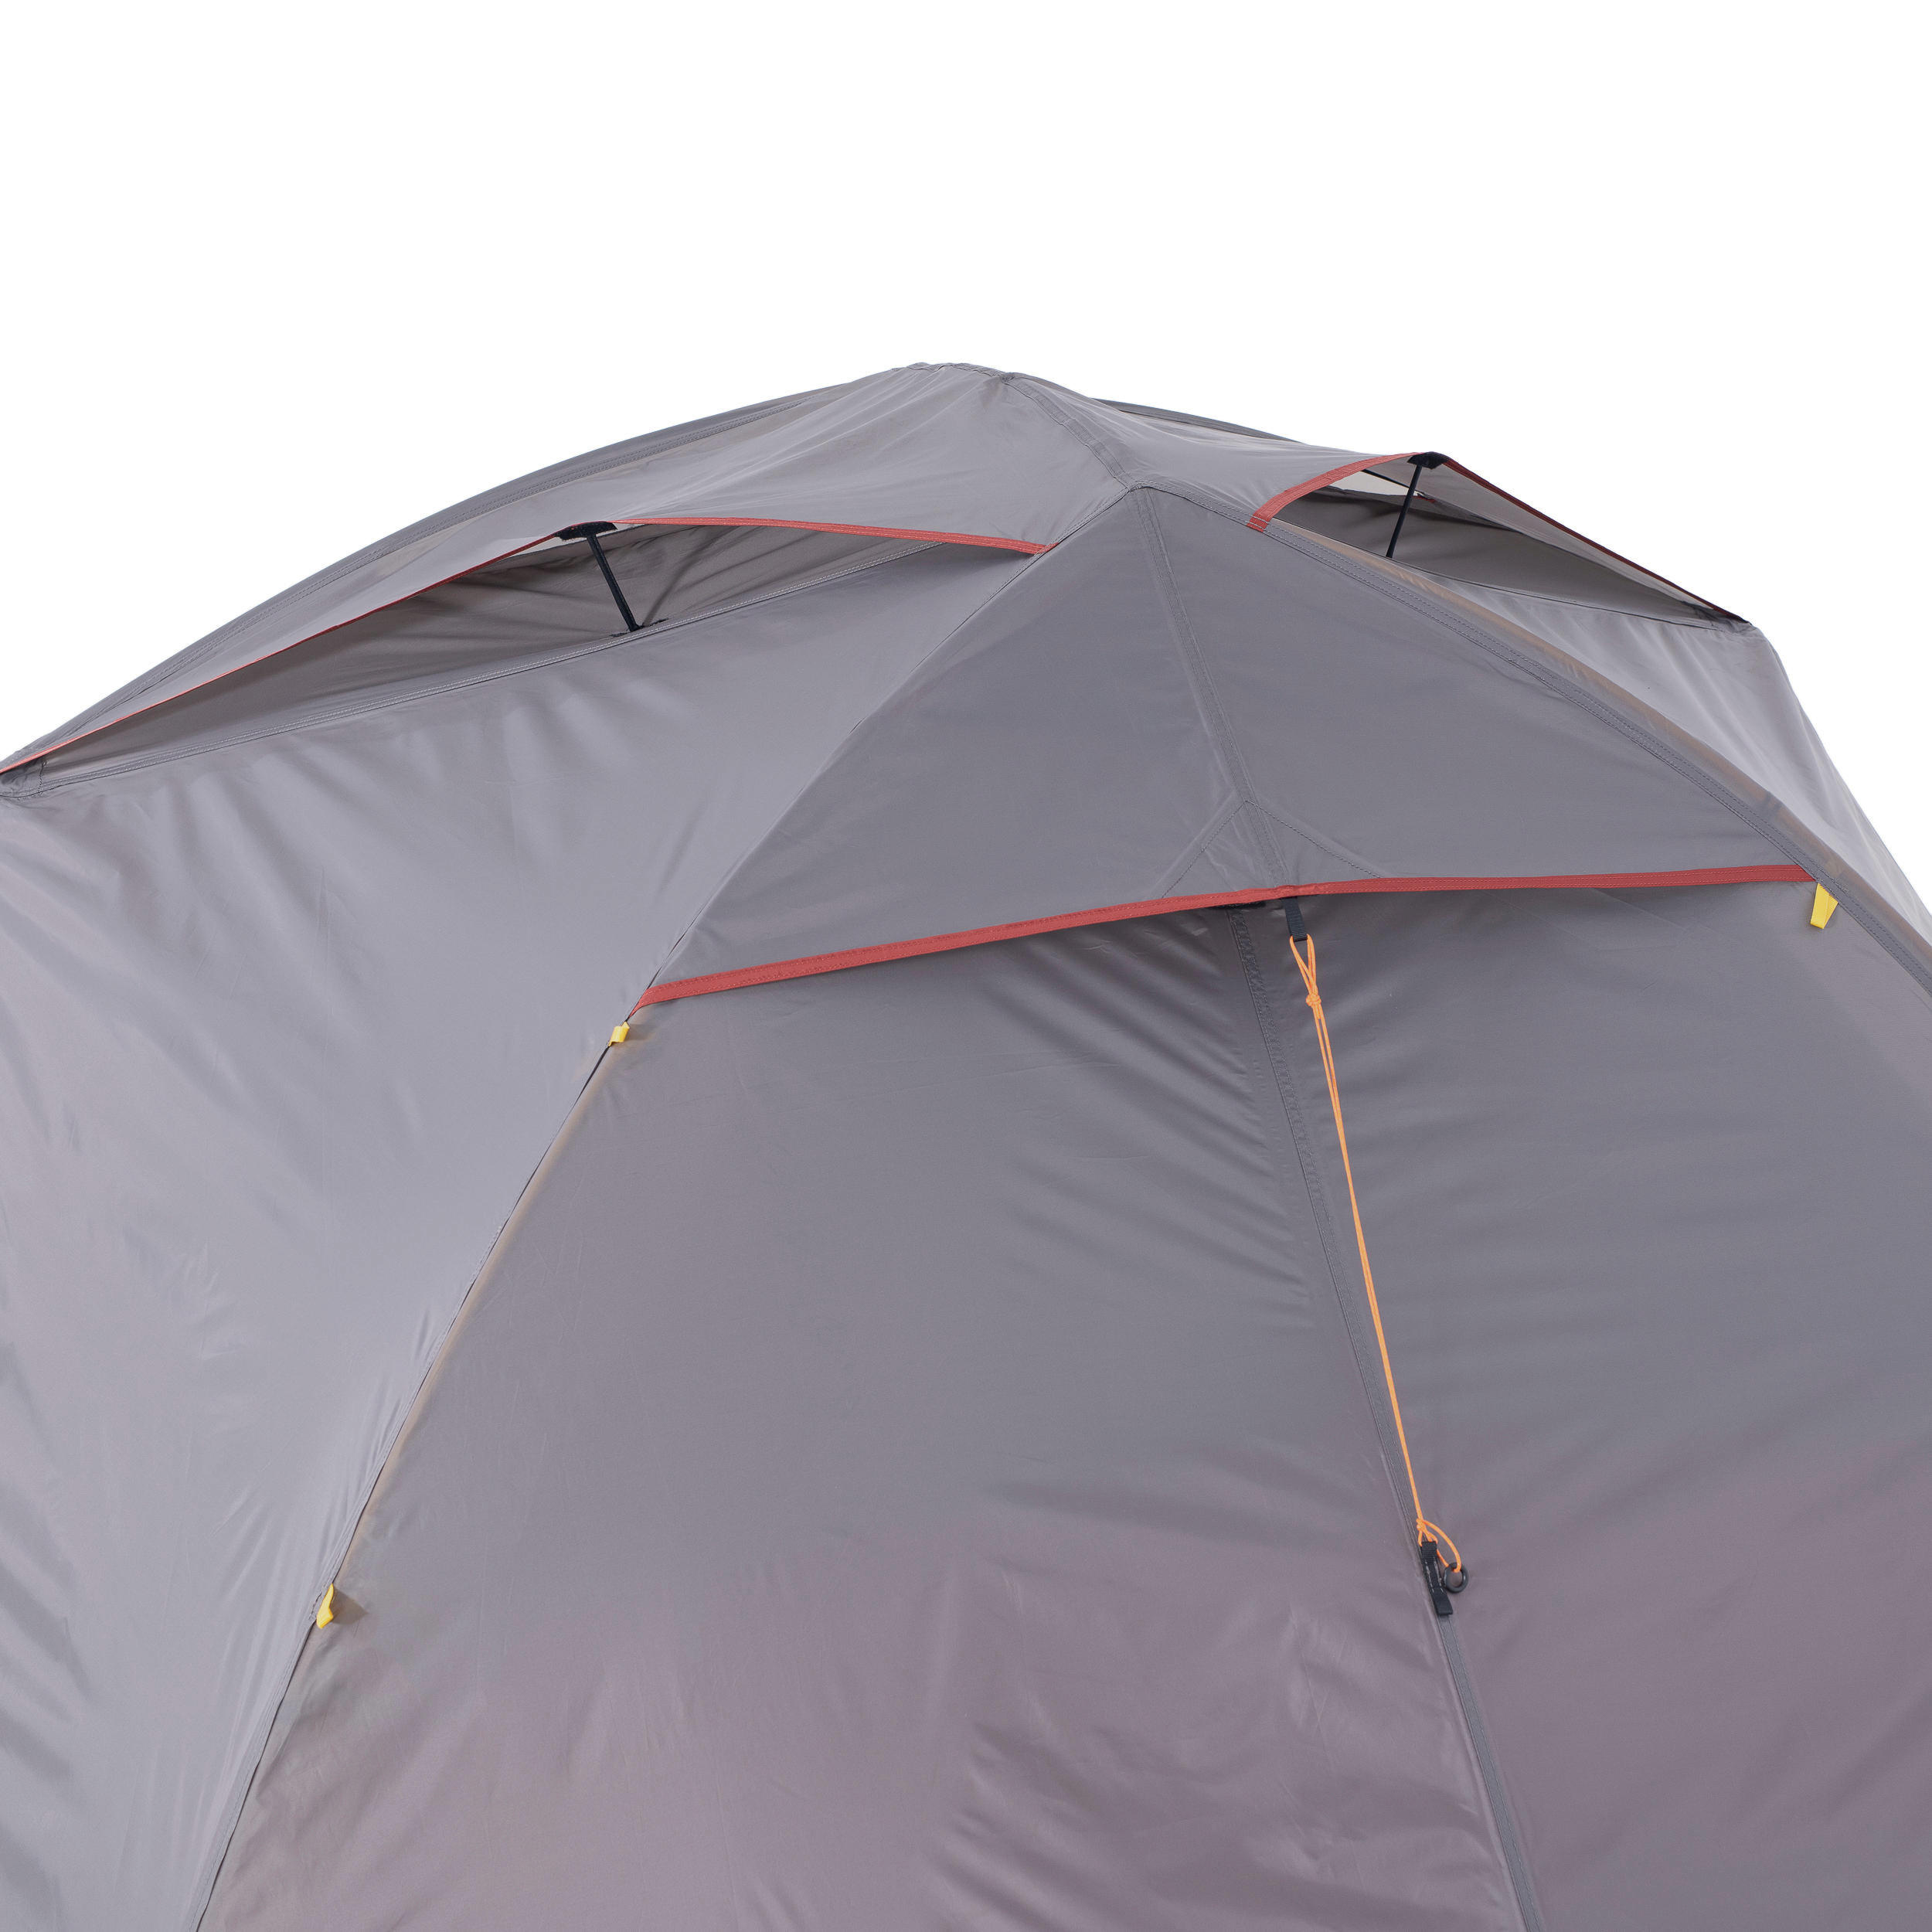 Dome Trekking Tent - 3 person - MT900 11/18